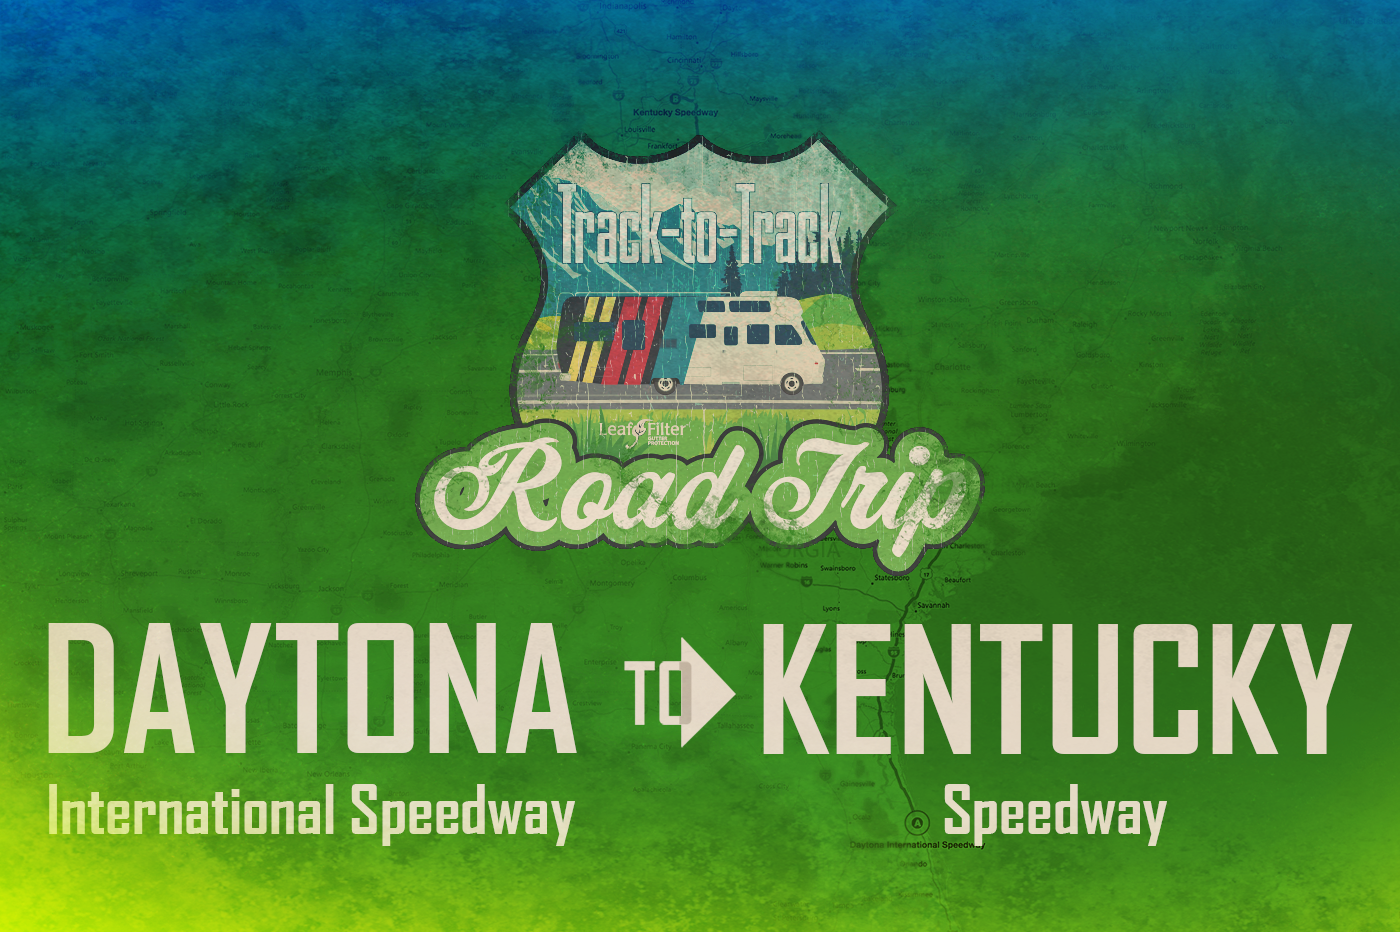 Track-to-track road trip Daytona to Kentucky